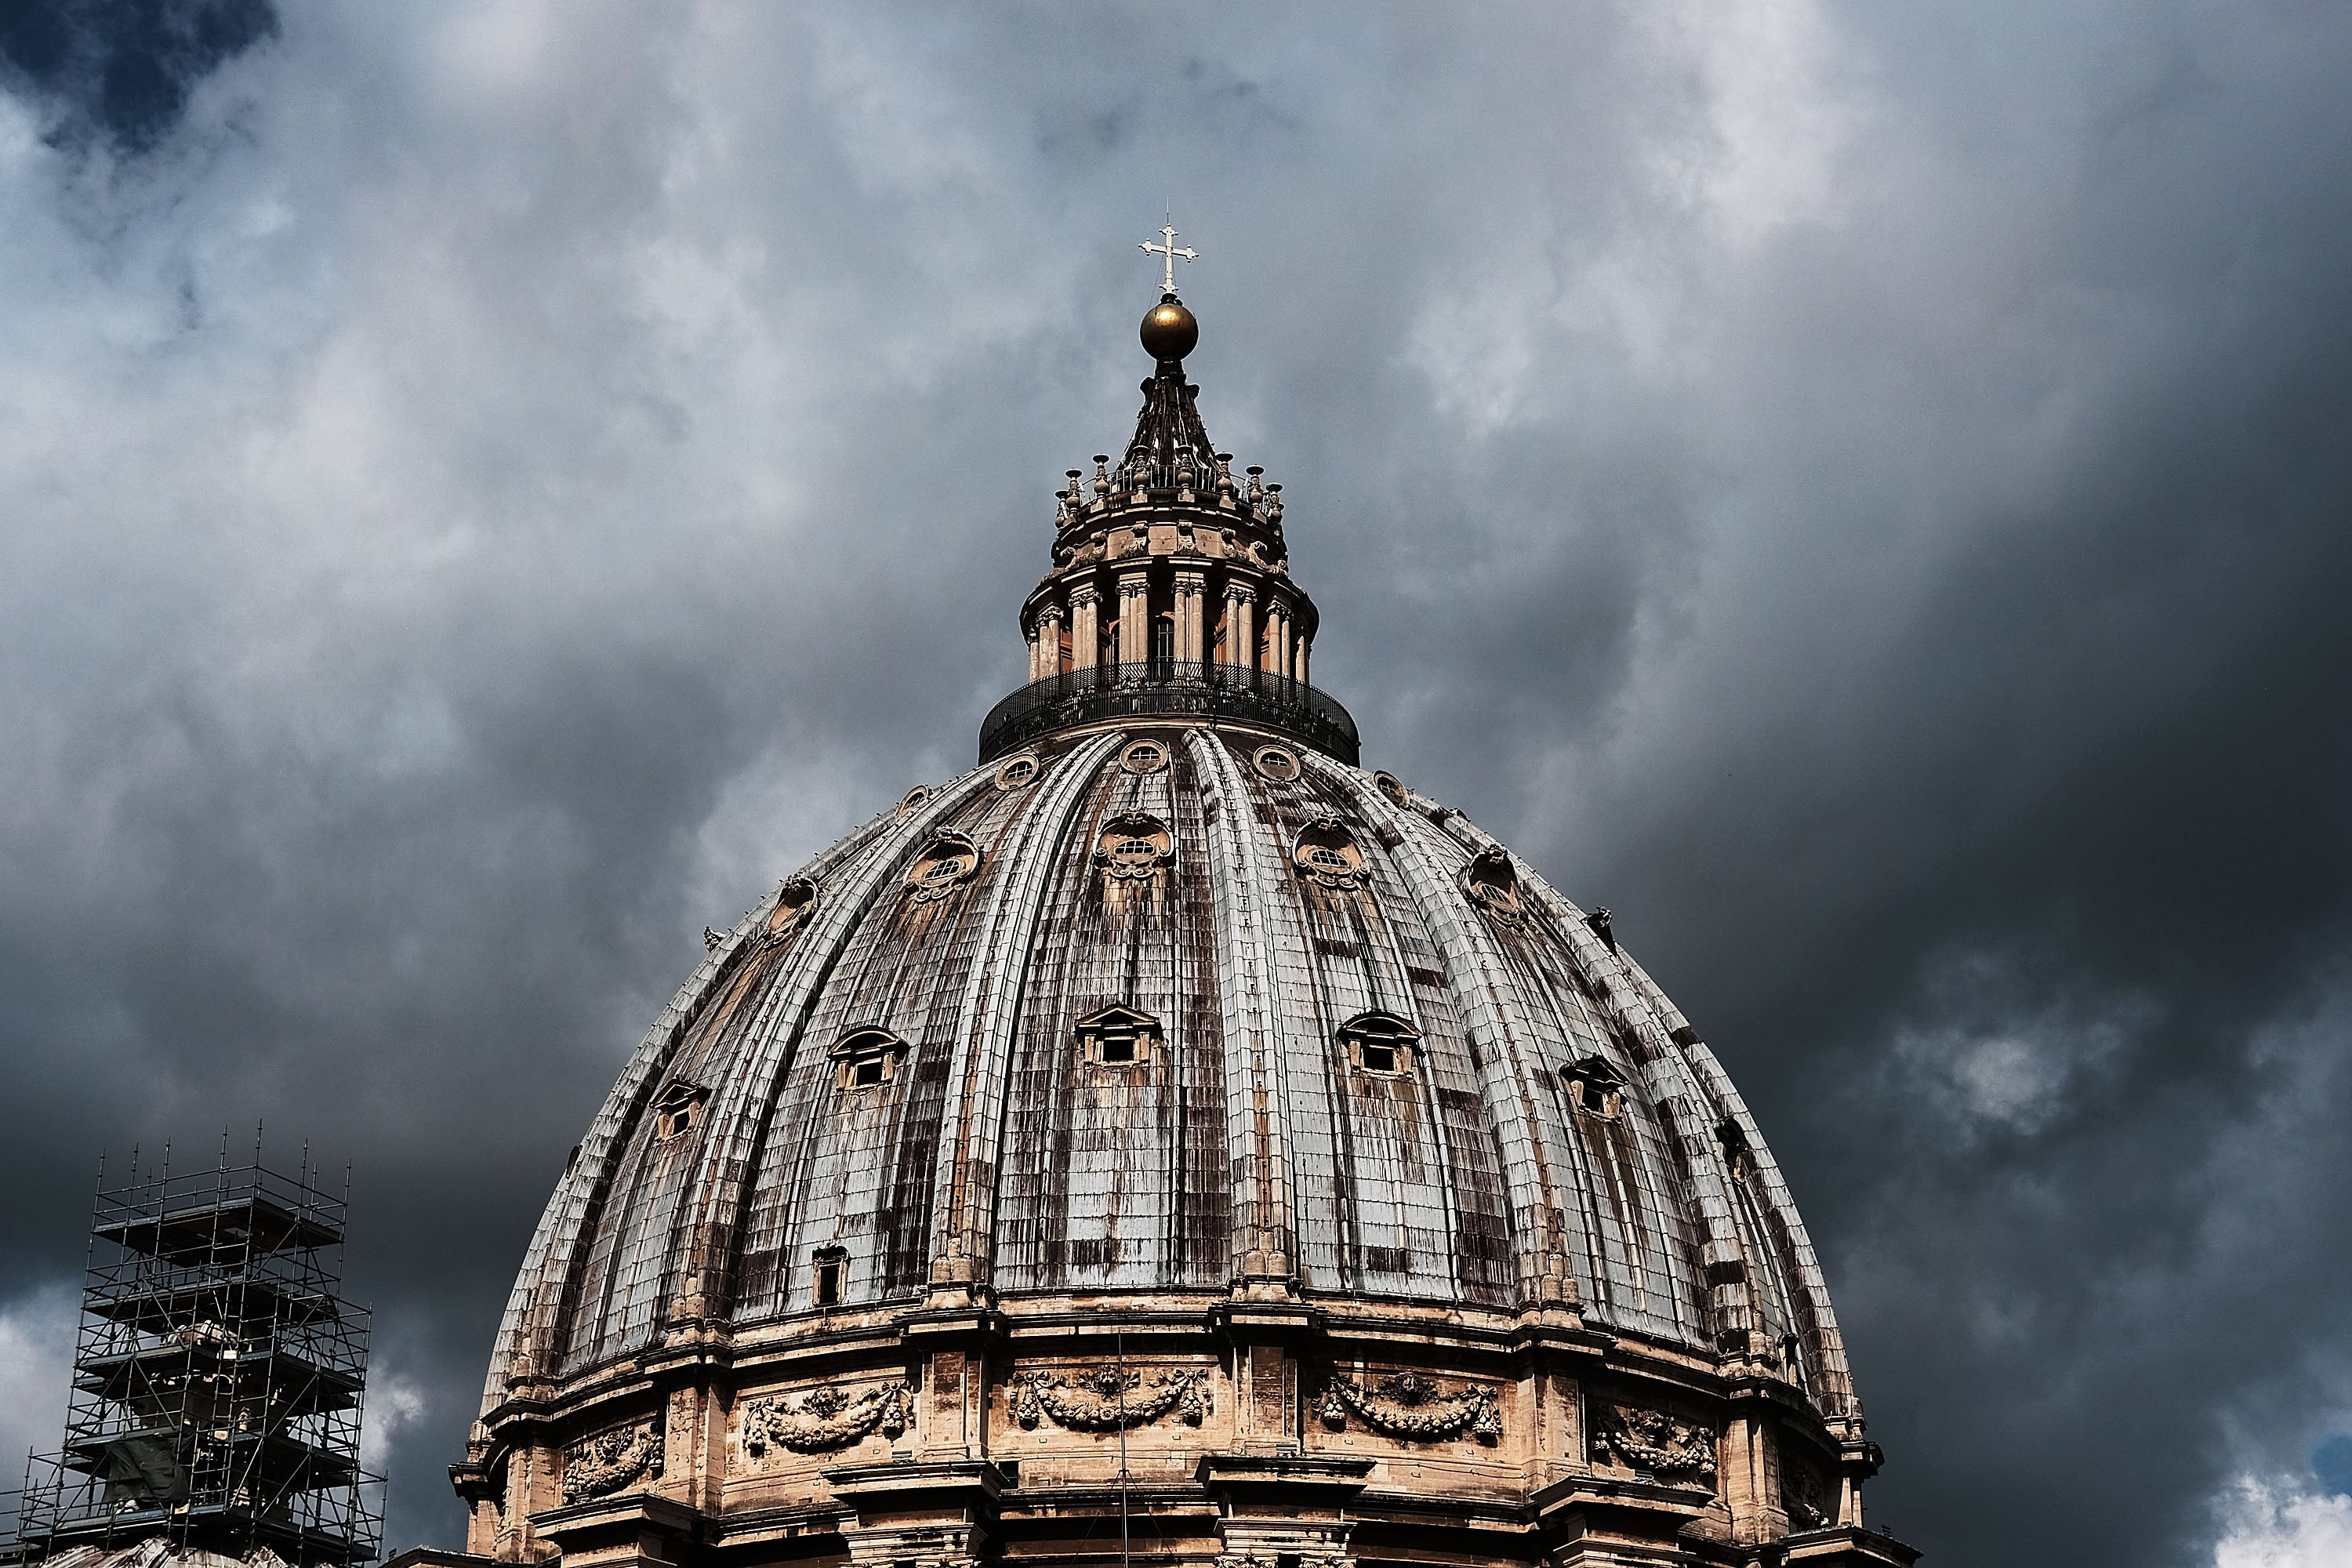 St Peter’s Basilica in Vatican City